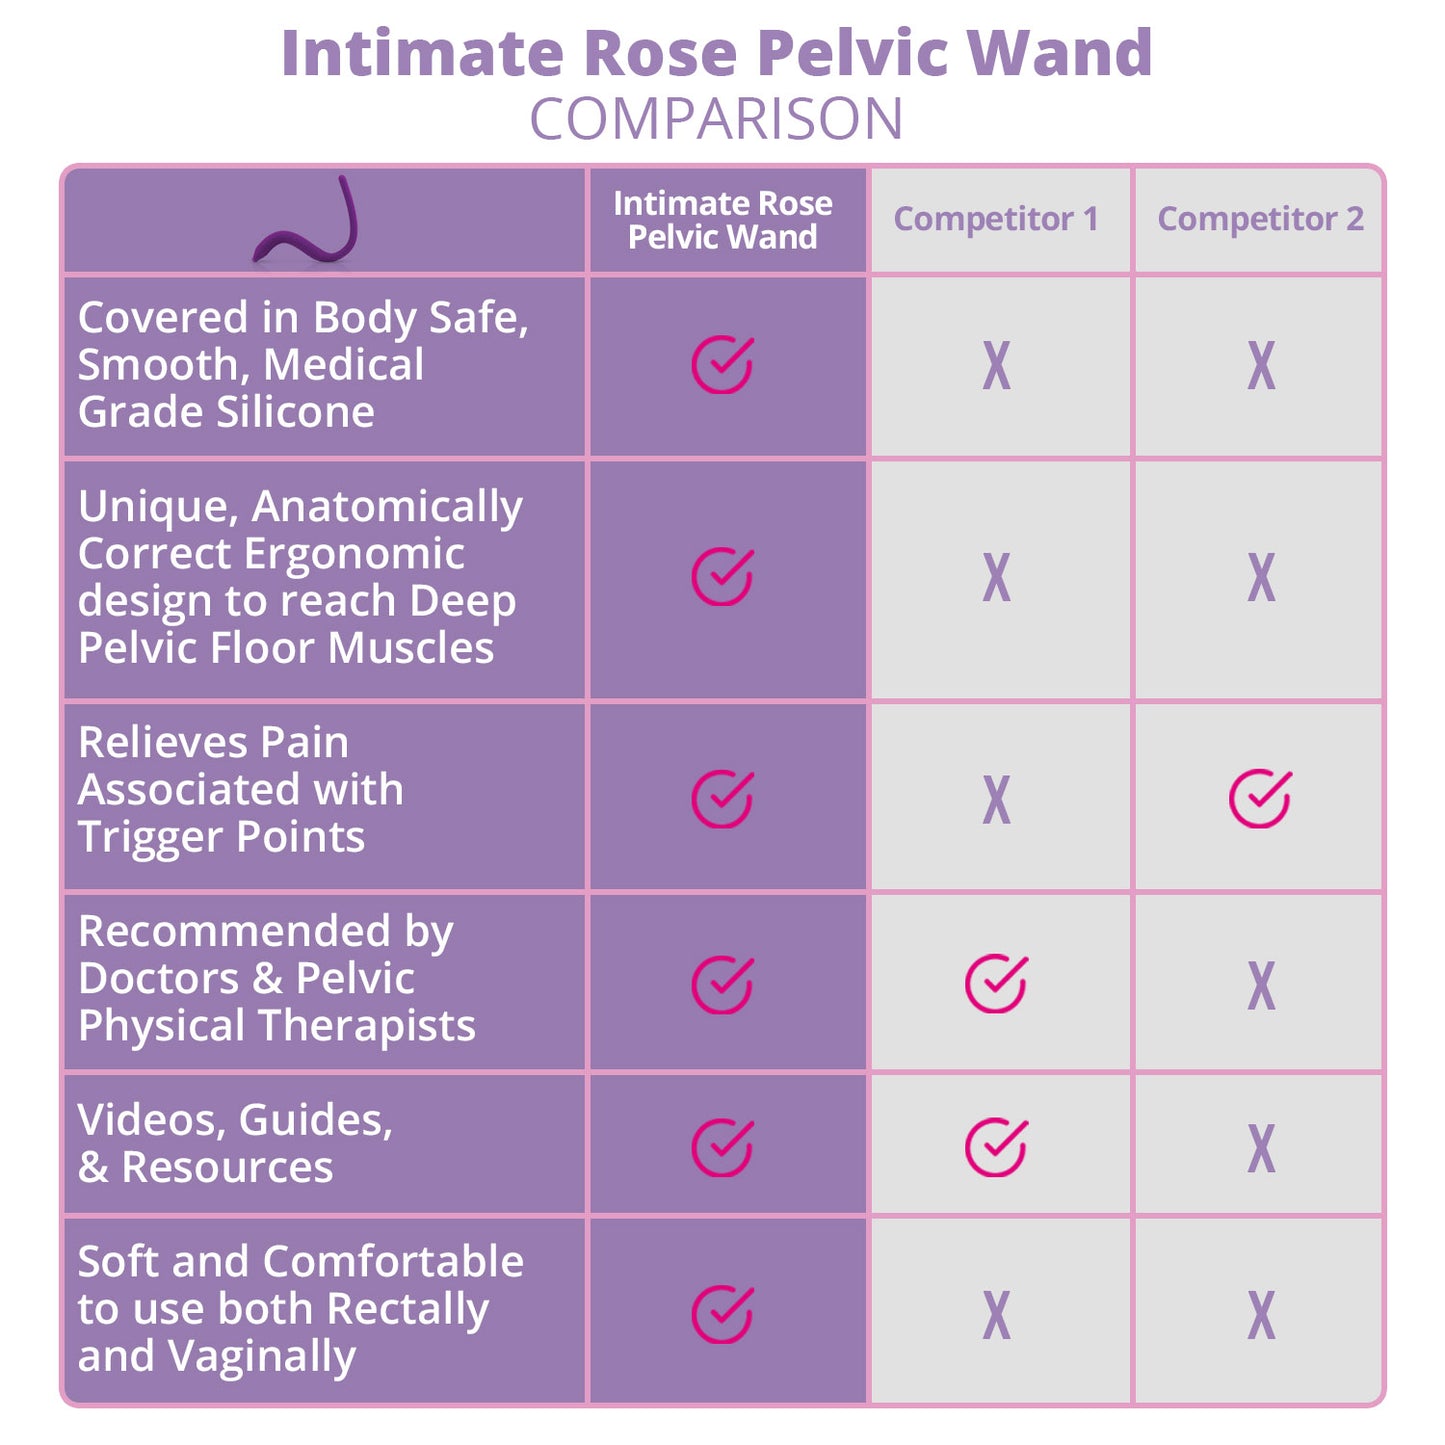 Intimate Rose Pelvic Wand